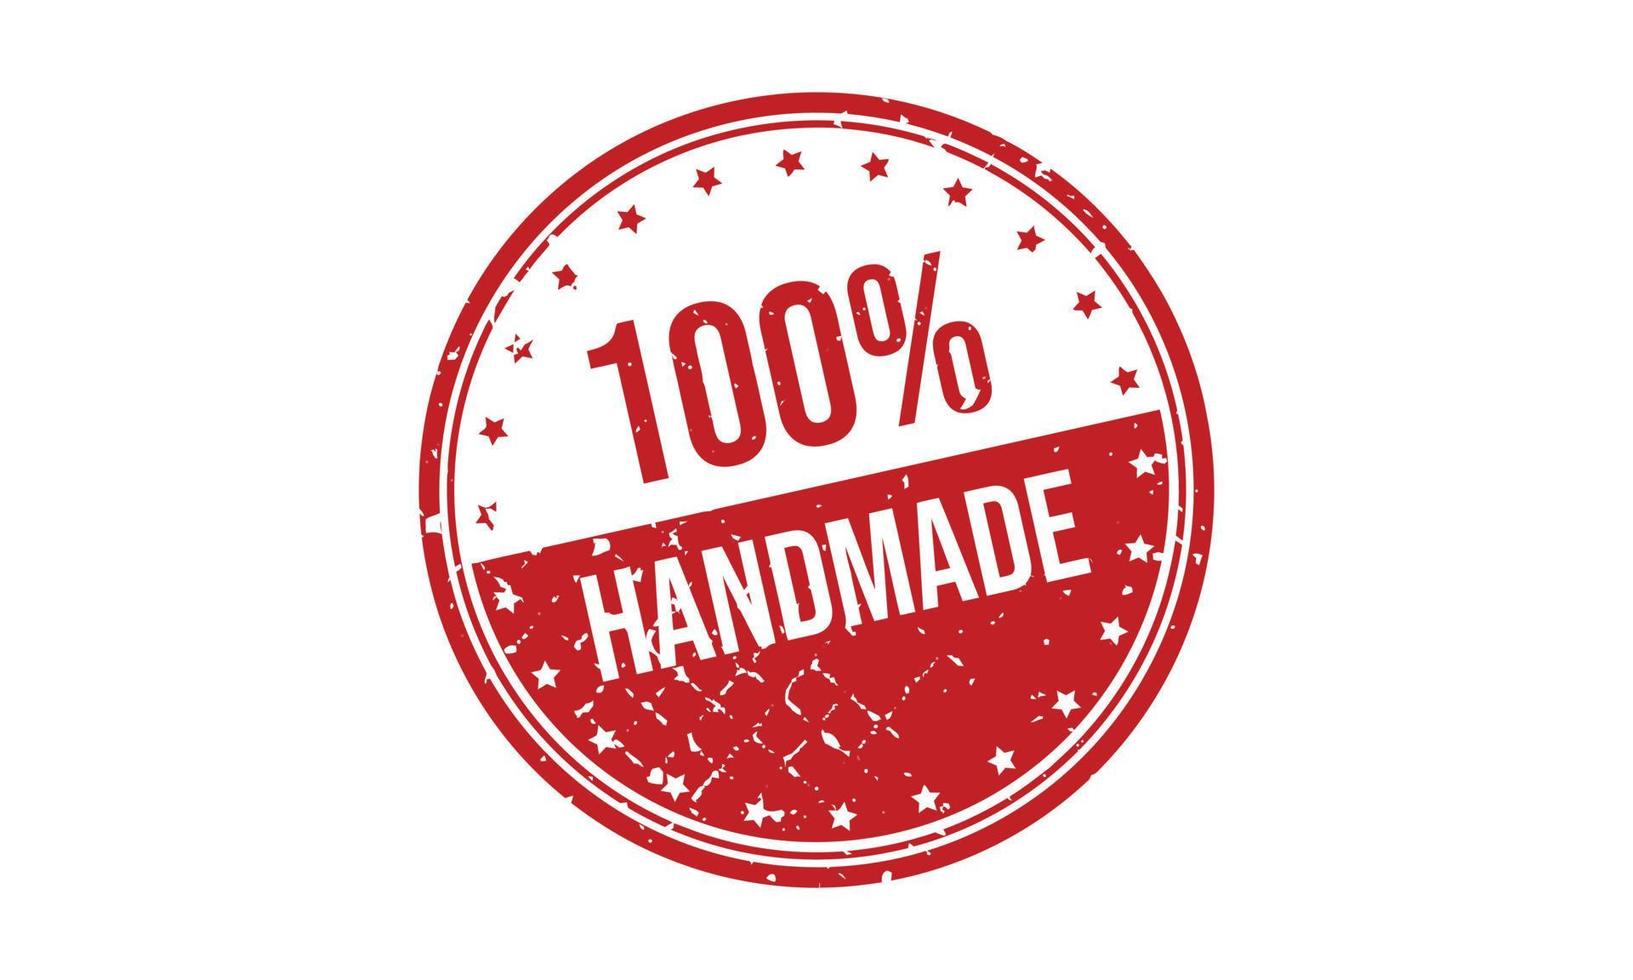 100 Percent Handmade Rubber Stamp vector